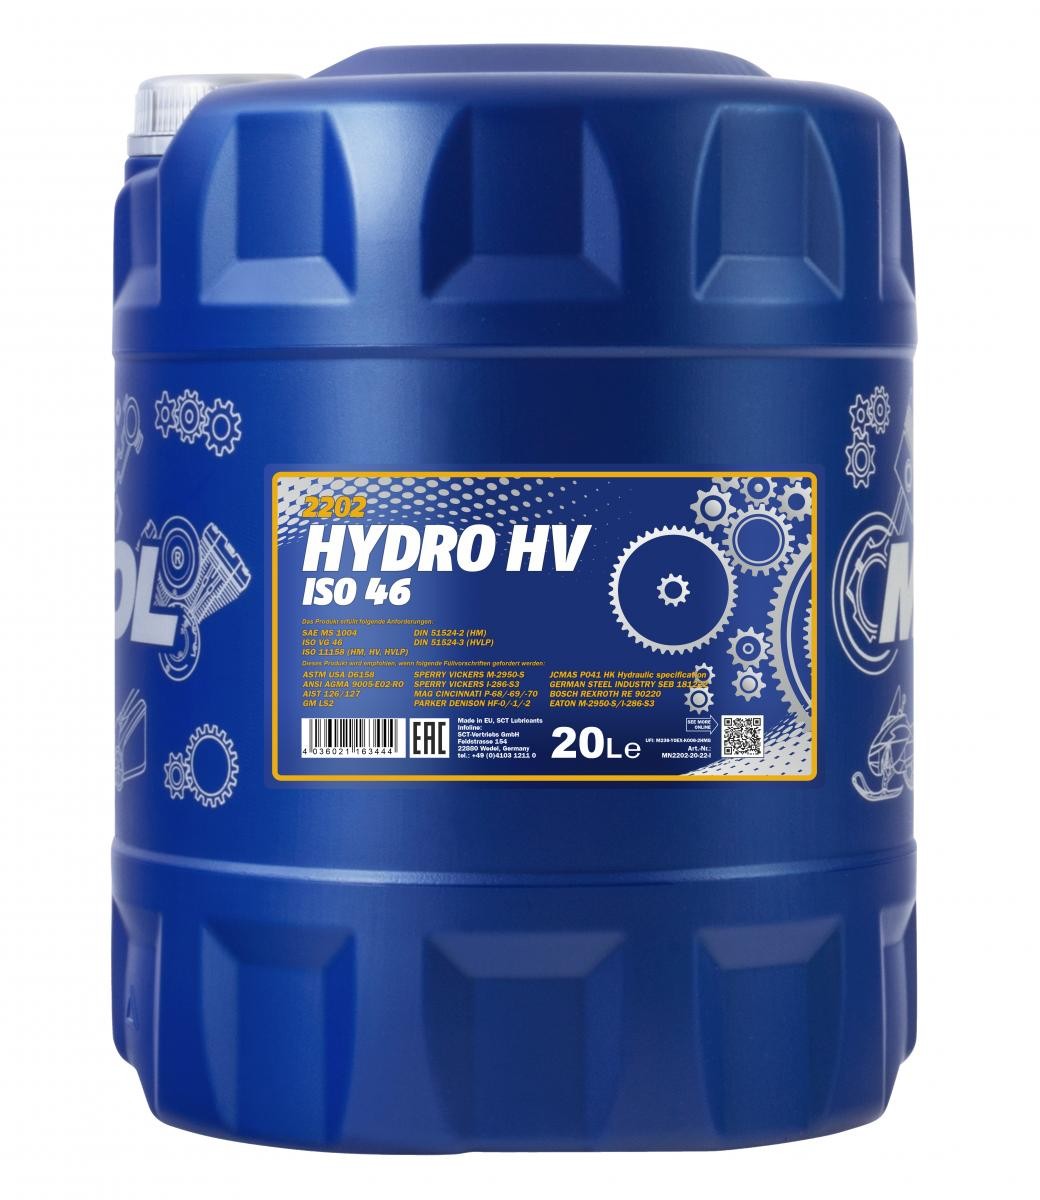 MANNOL Hydro HV ISO 46, ISO VG 46 MN2202-20 Central Hydraulic Oil